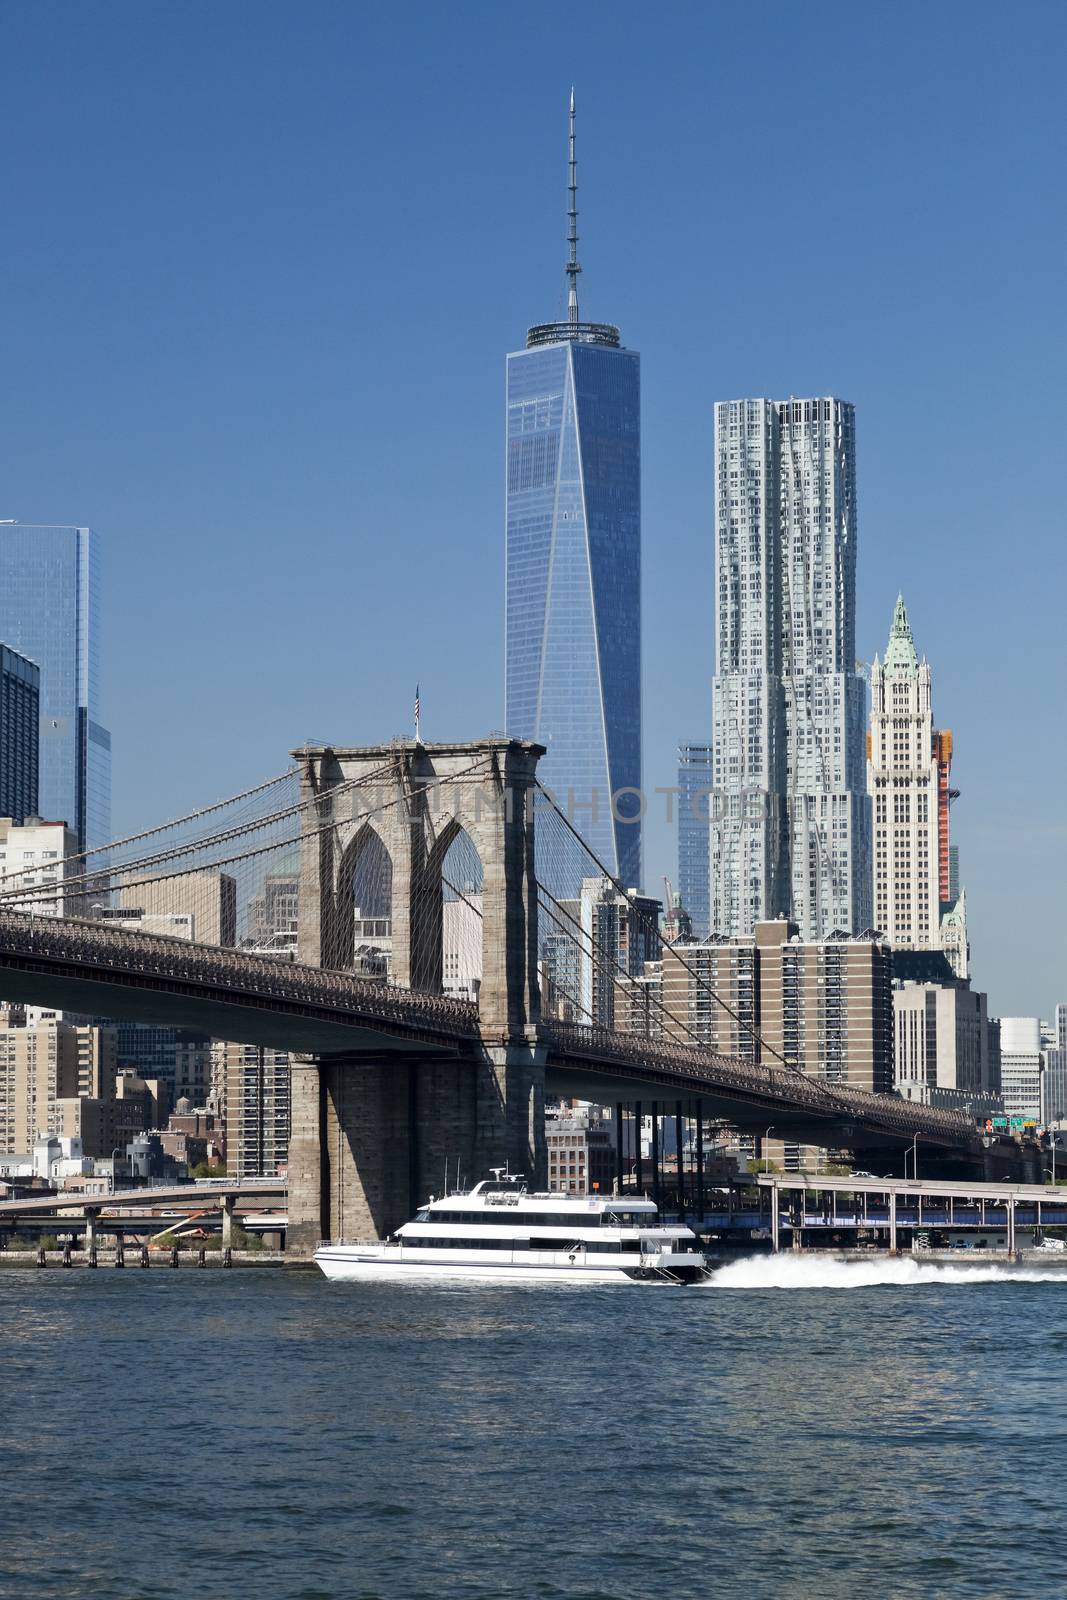 The New York Downtown w Brooklyn Bridge by hanusst